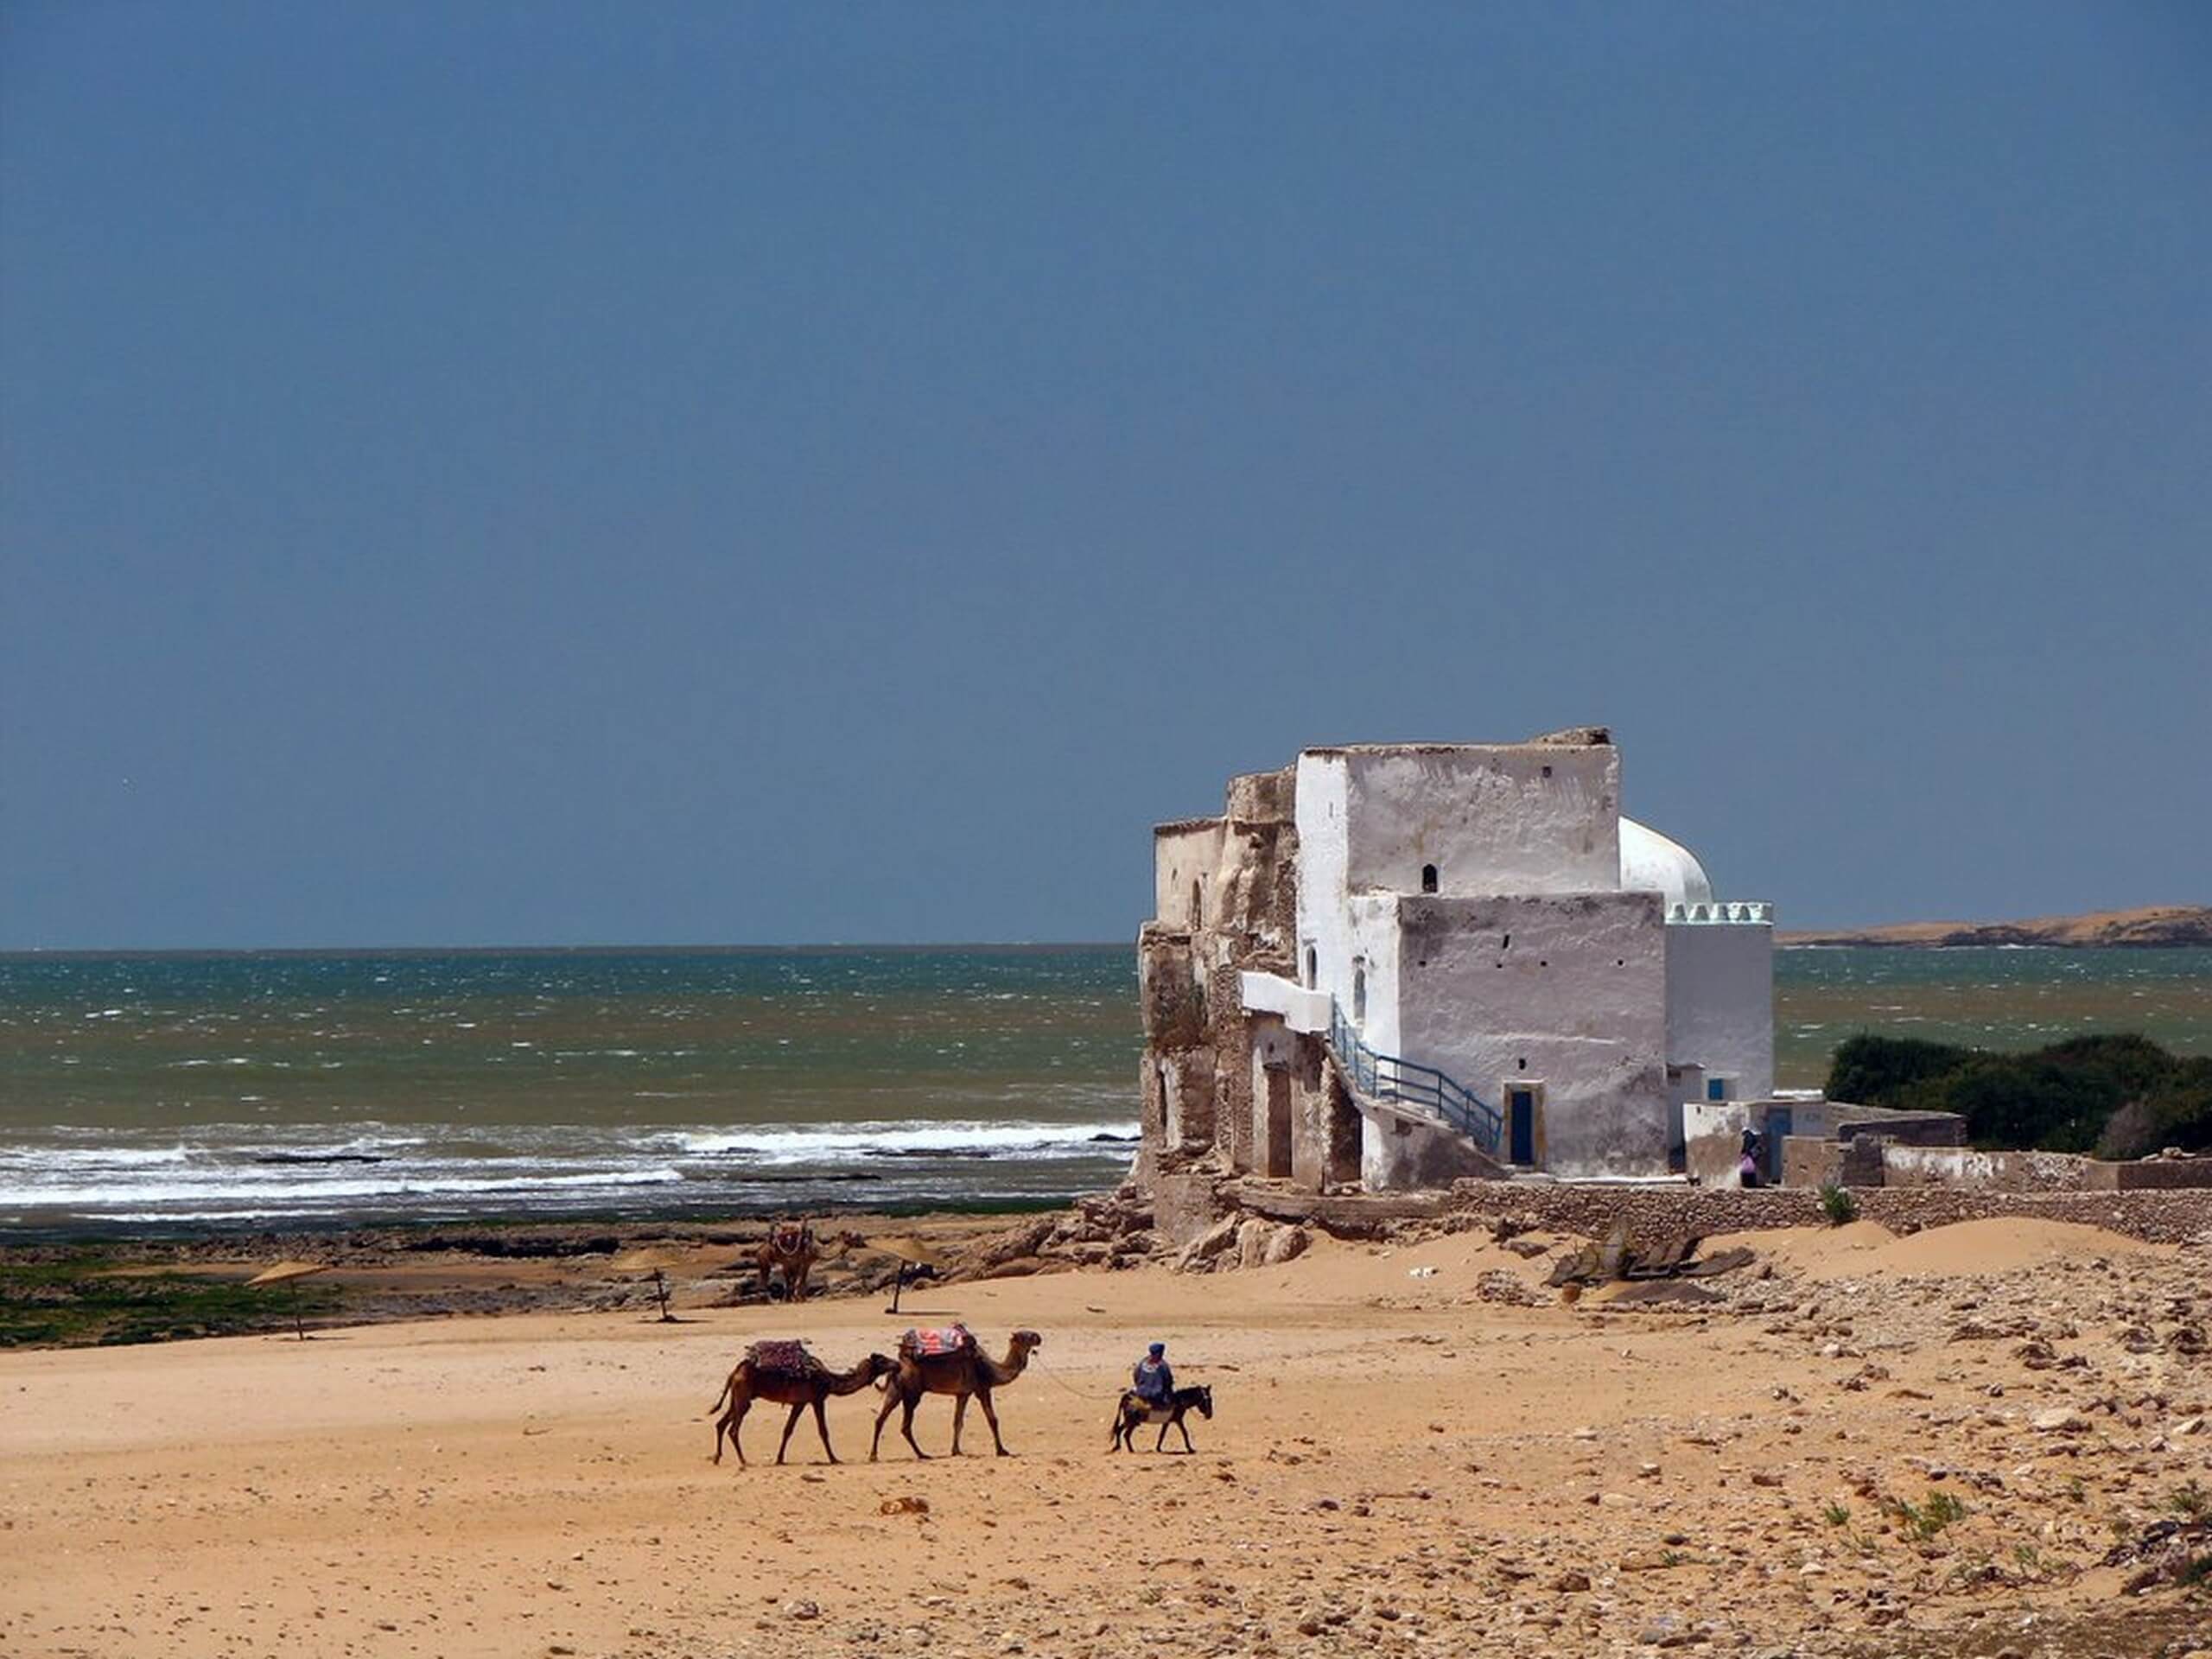 Sandy beach in Morocco